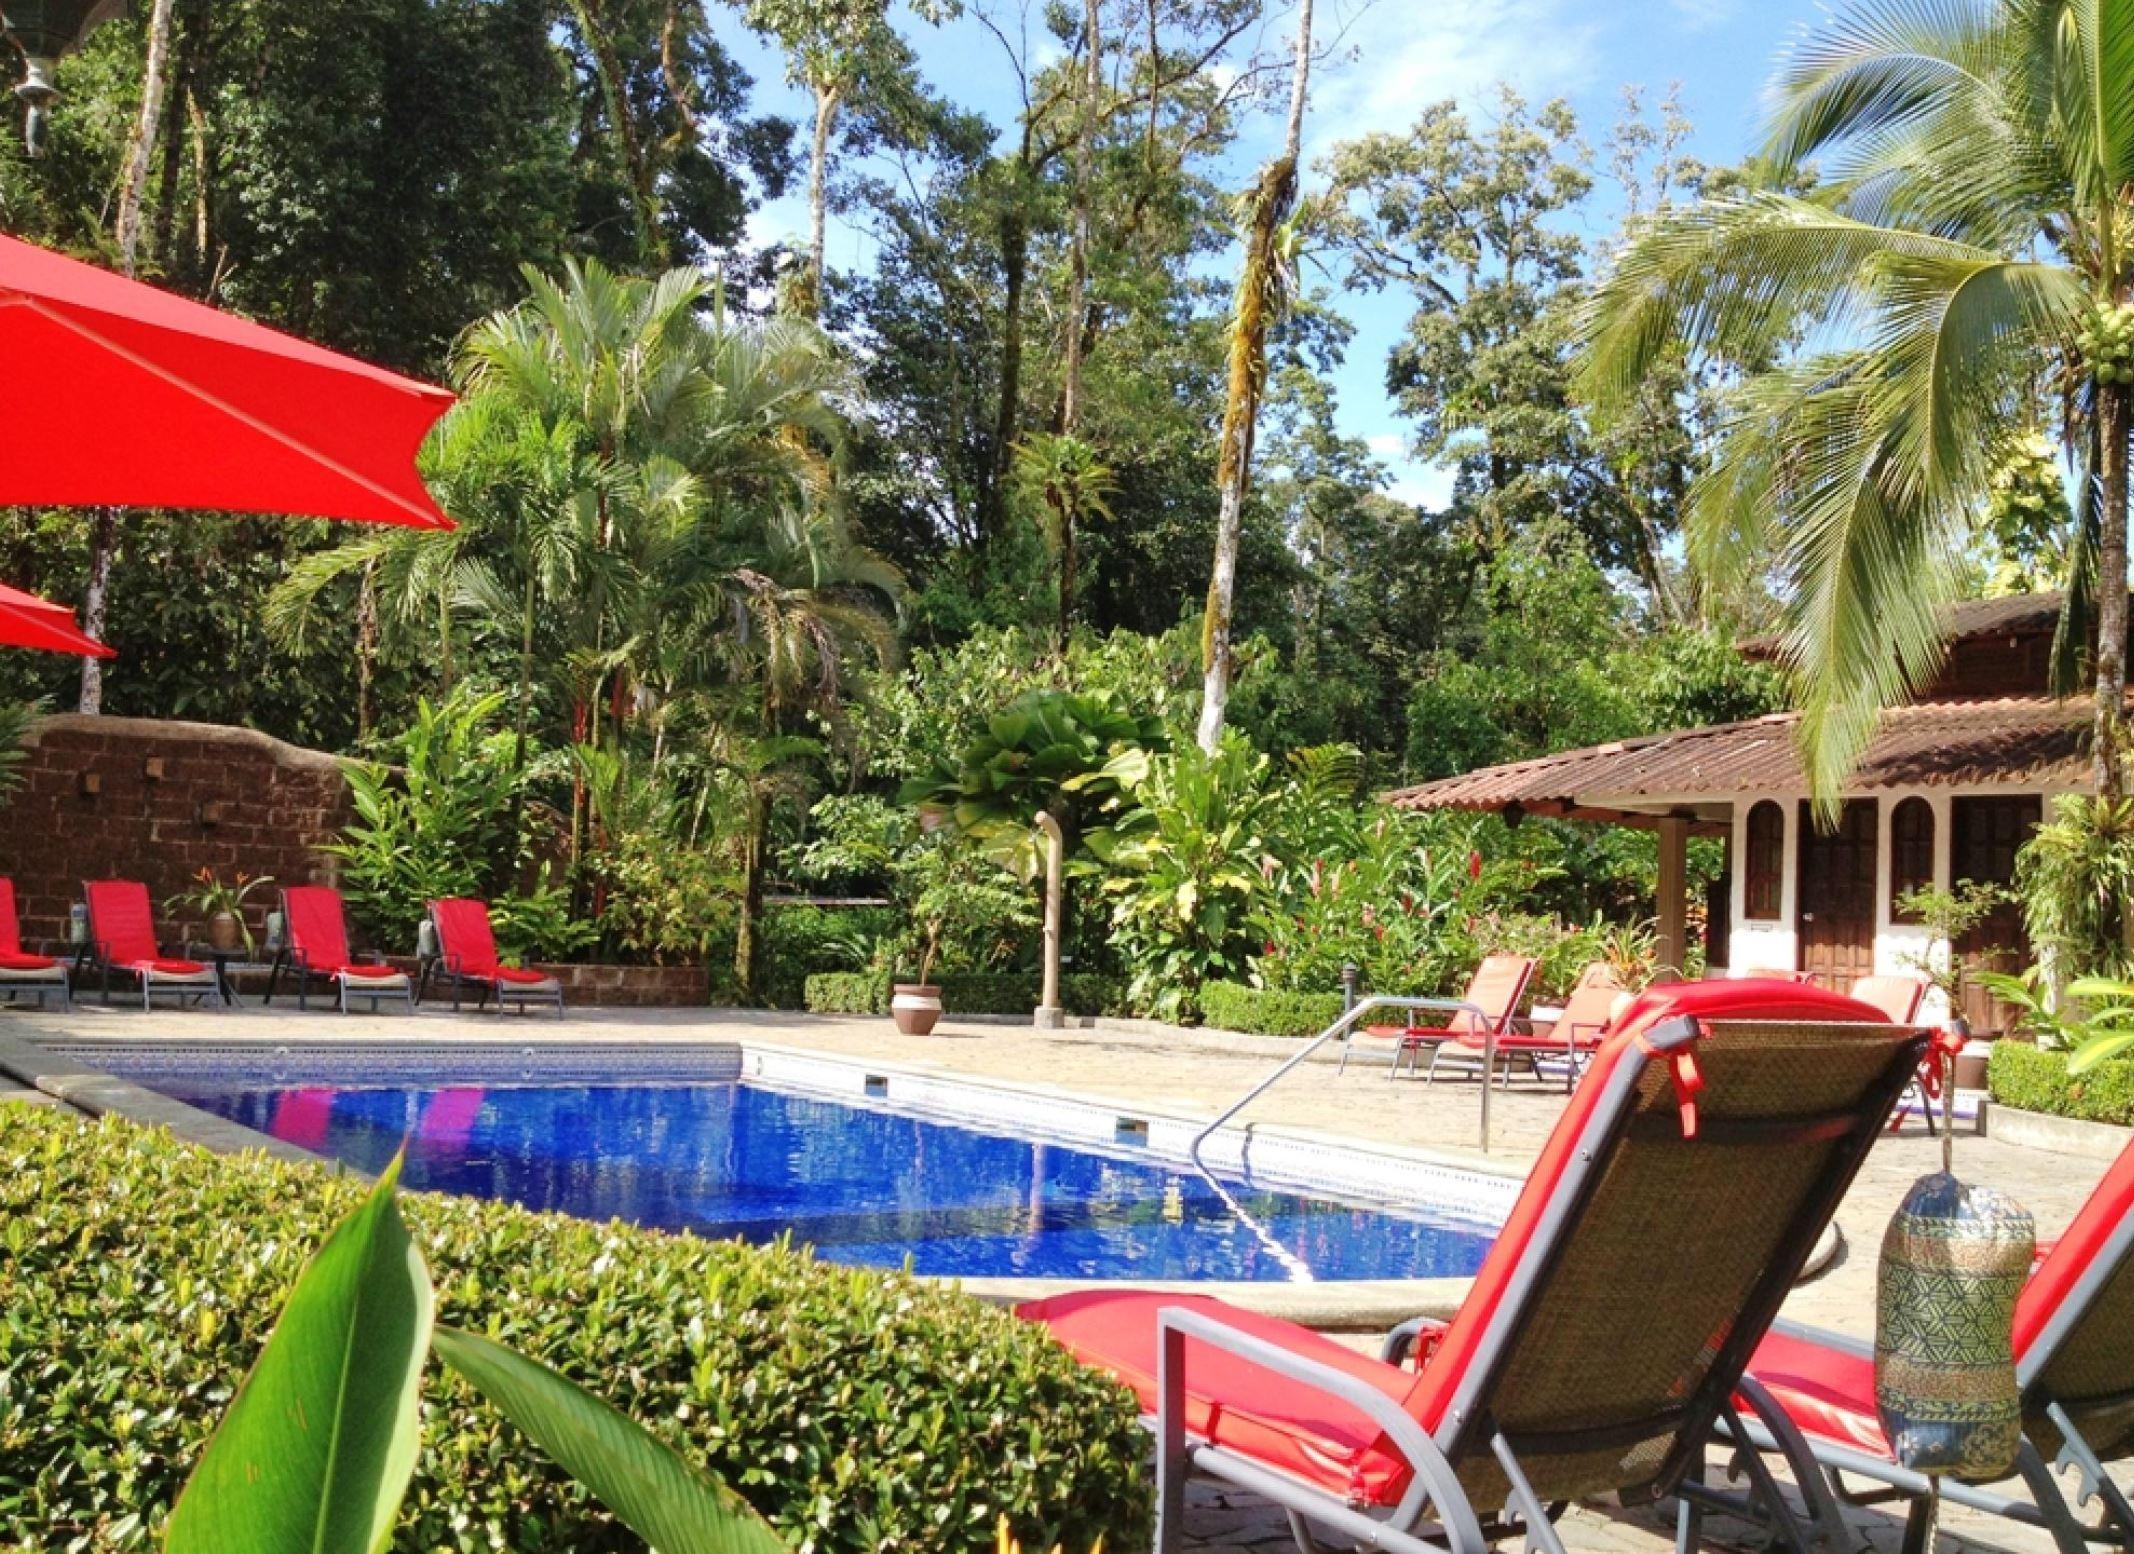 Casa Corcovado jungle lodge pool